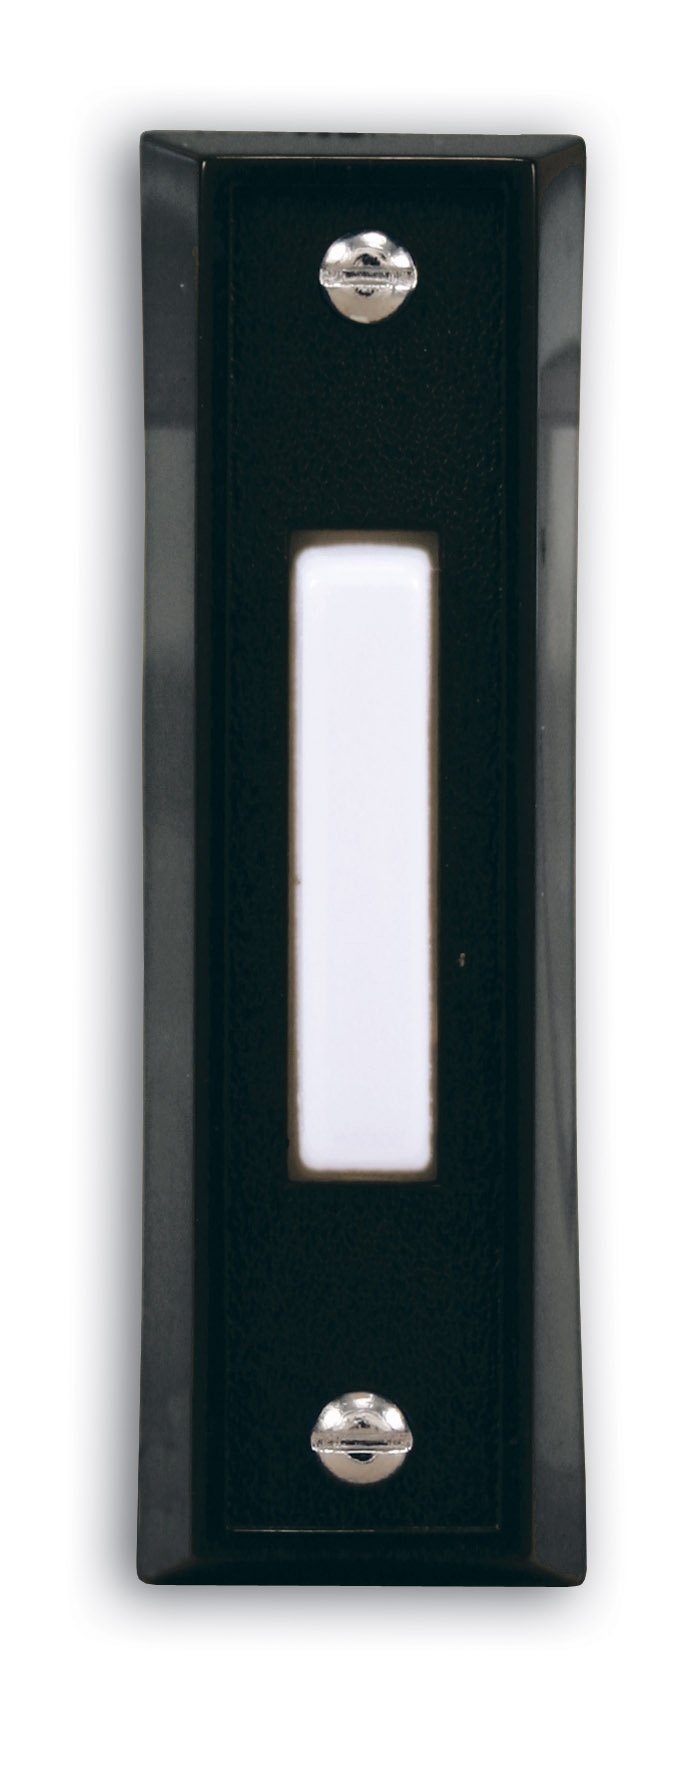 Book Cover Heath Zenith SL-664-02 Wired Push Button, Black Finish with White Center Button